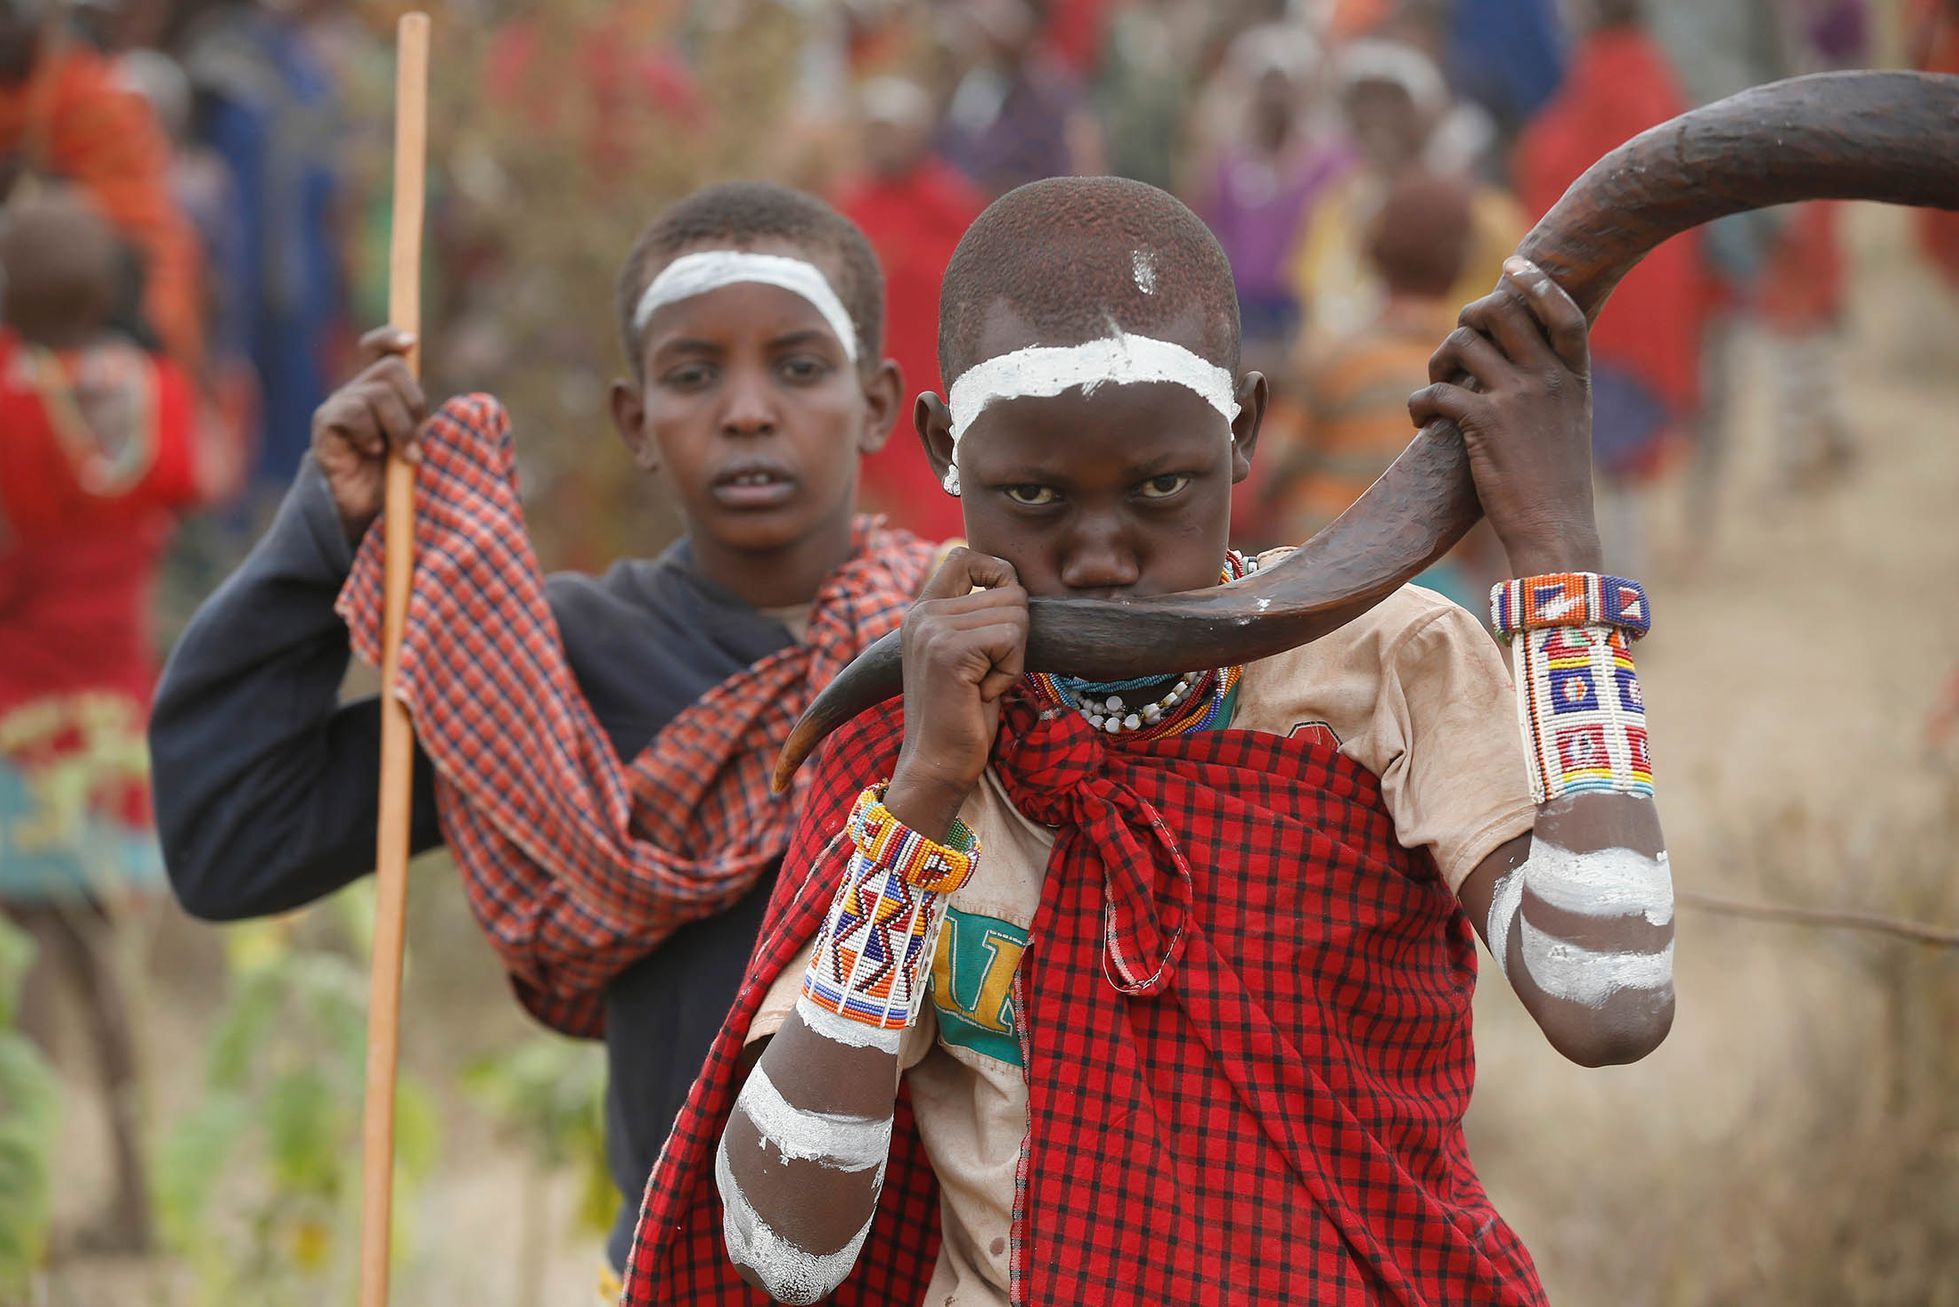 Fotogalerie / Keňa / Masajové / Rituál / Afrika / Reuters / 6